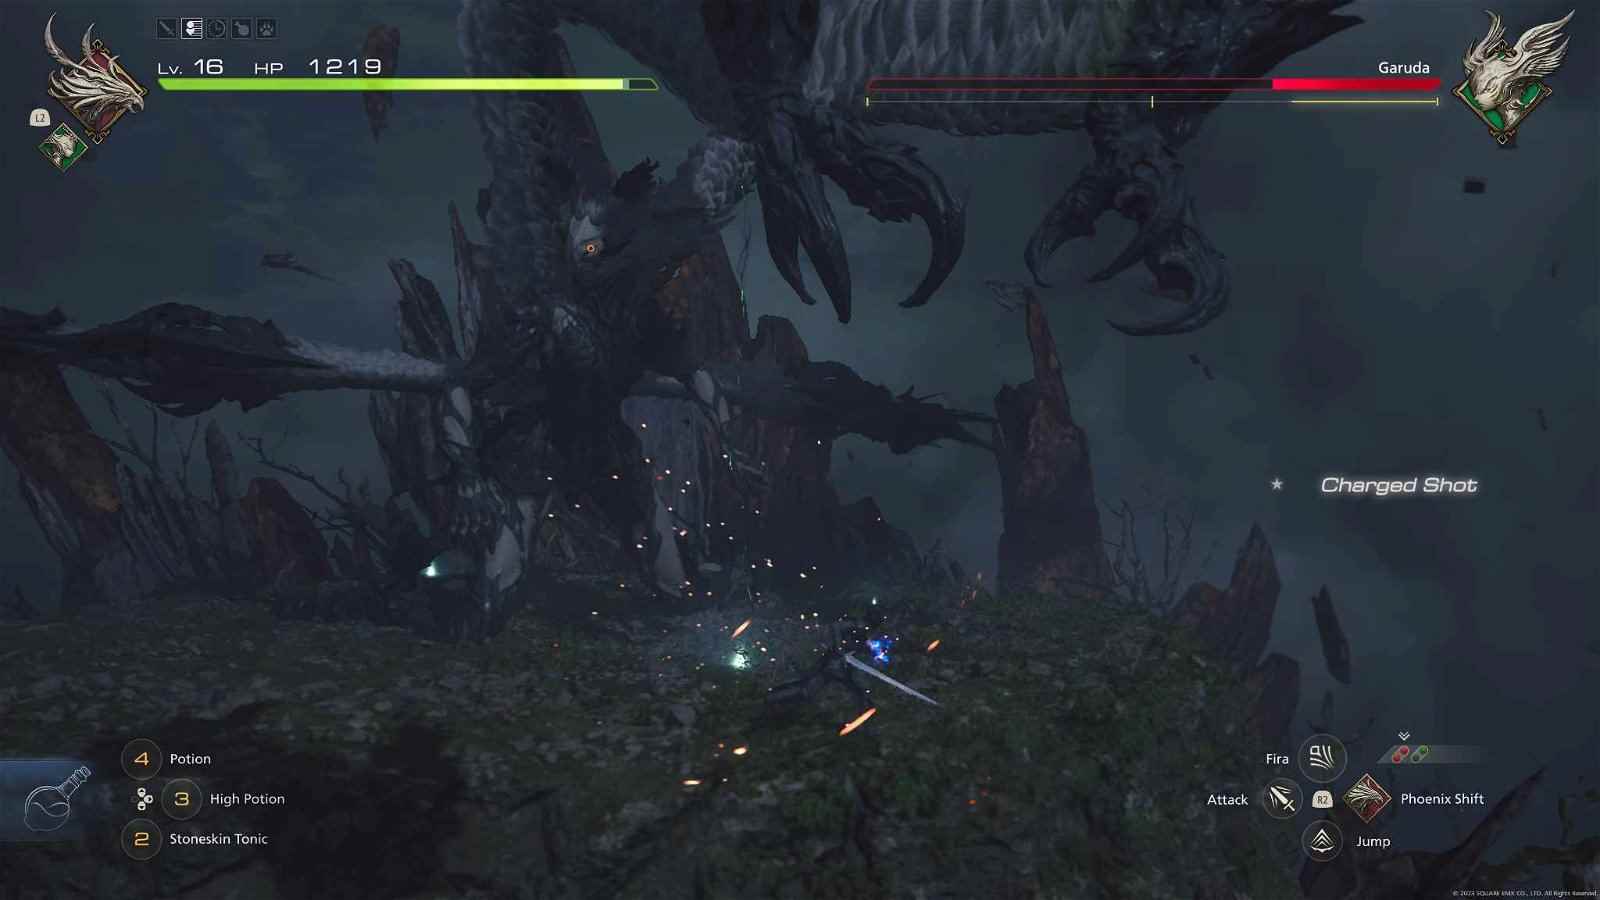 Clive Dövüşüyor Garuda Final Fantasy XVI 16